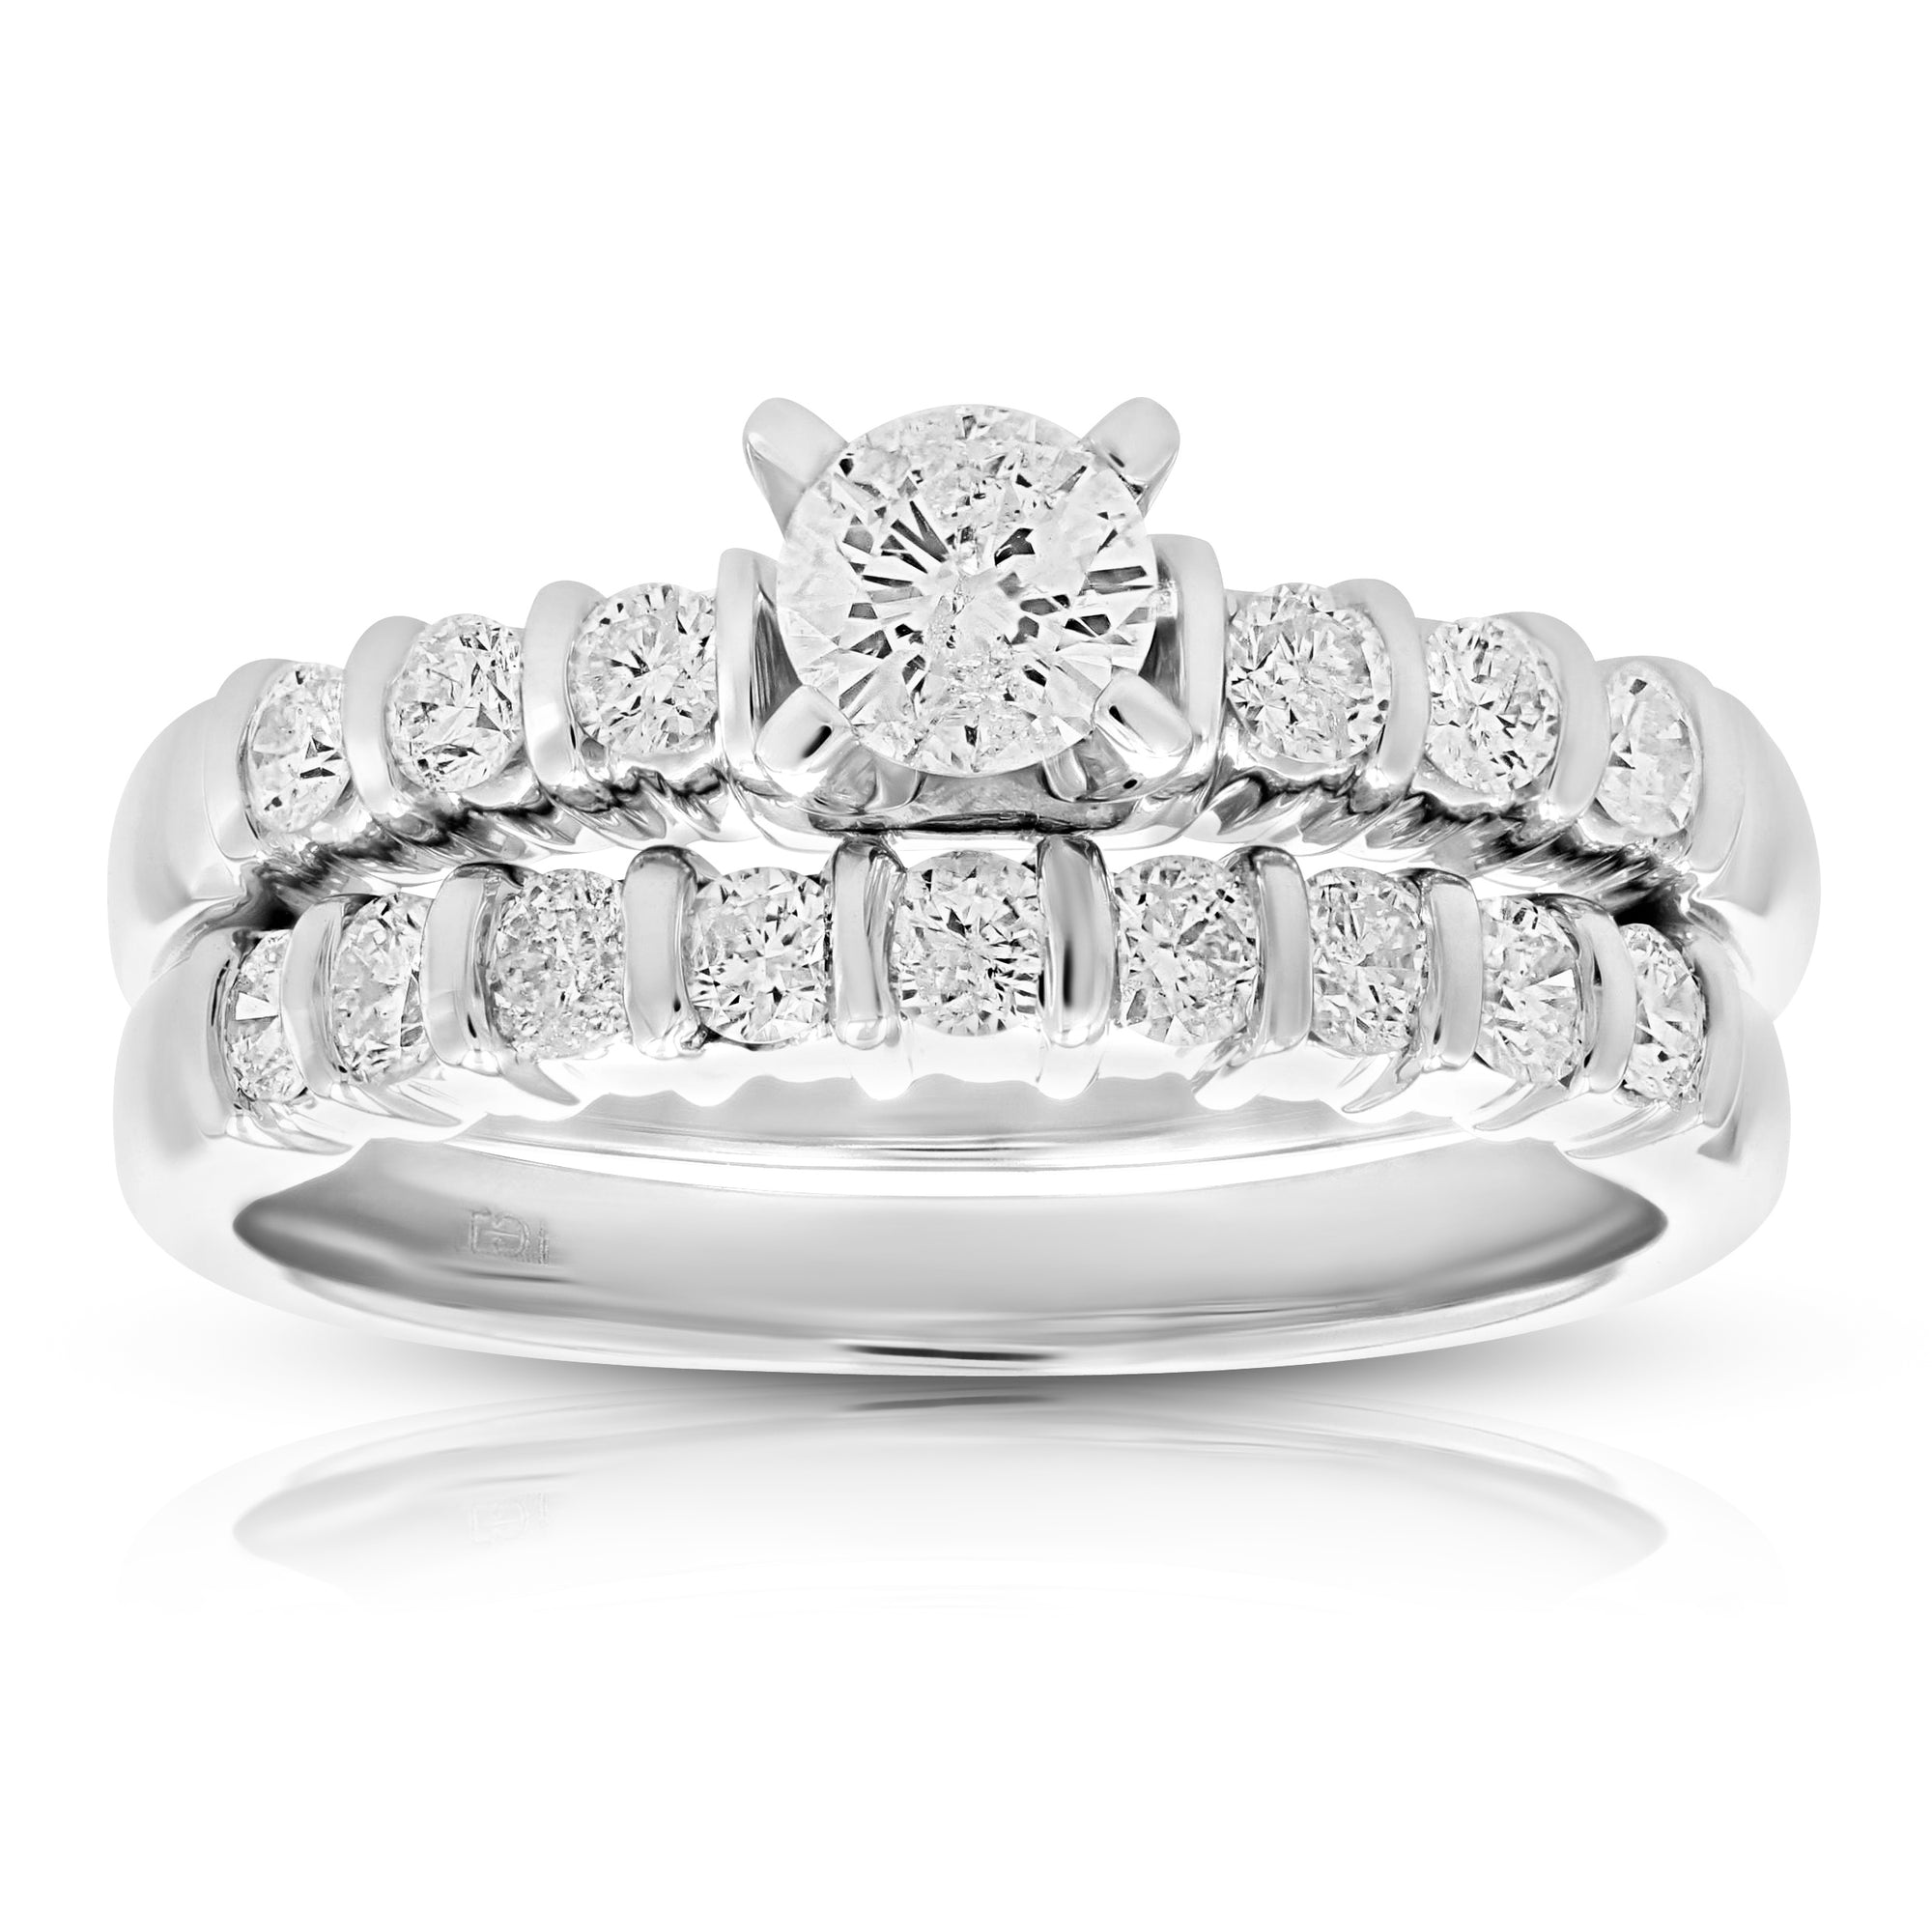 1 cttw Diamond Channel Set Wedding Engagement Ring Set 14K White Gold Size 7